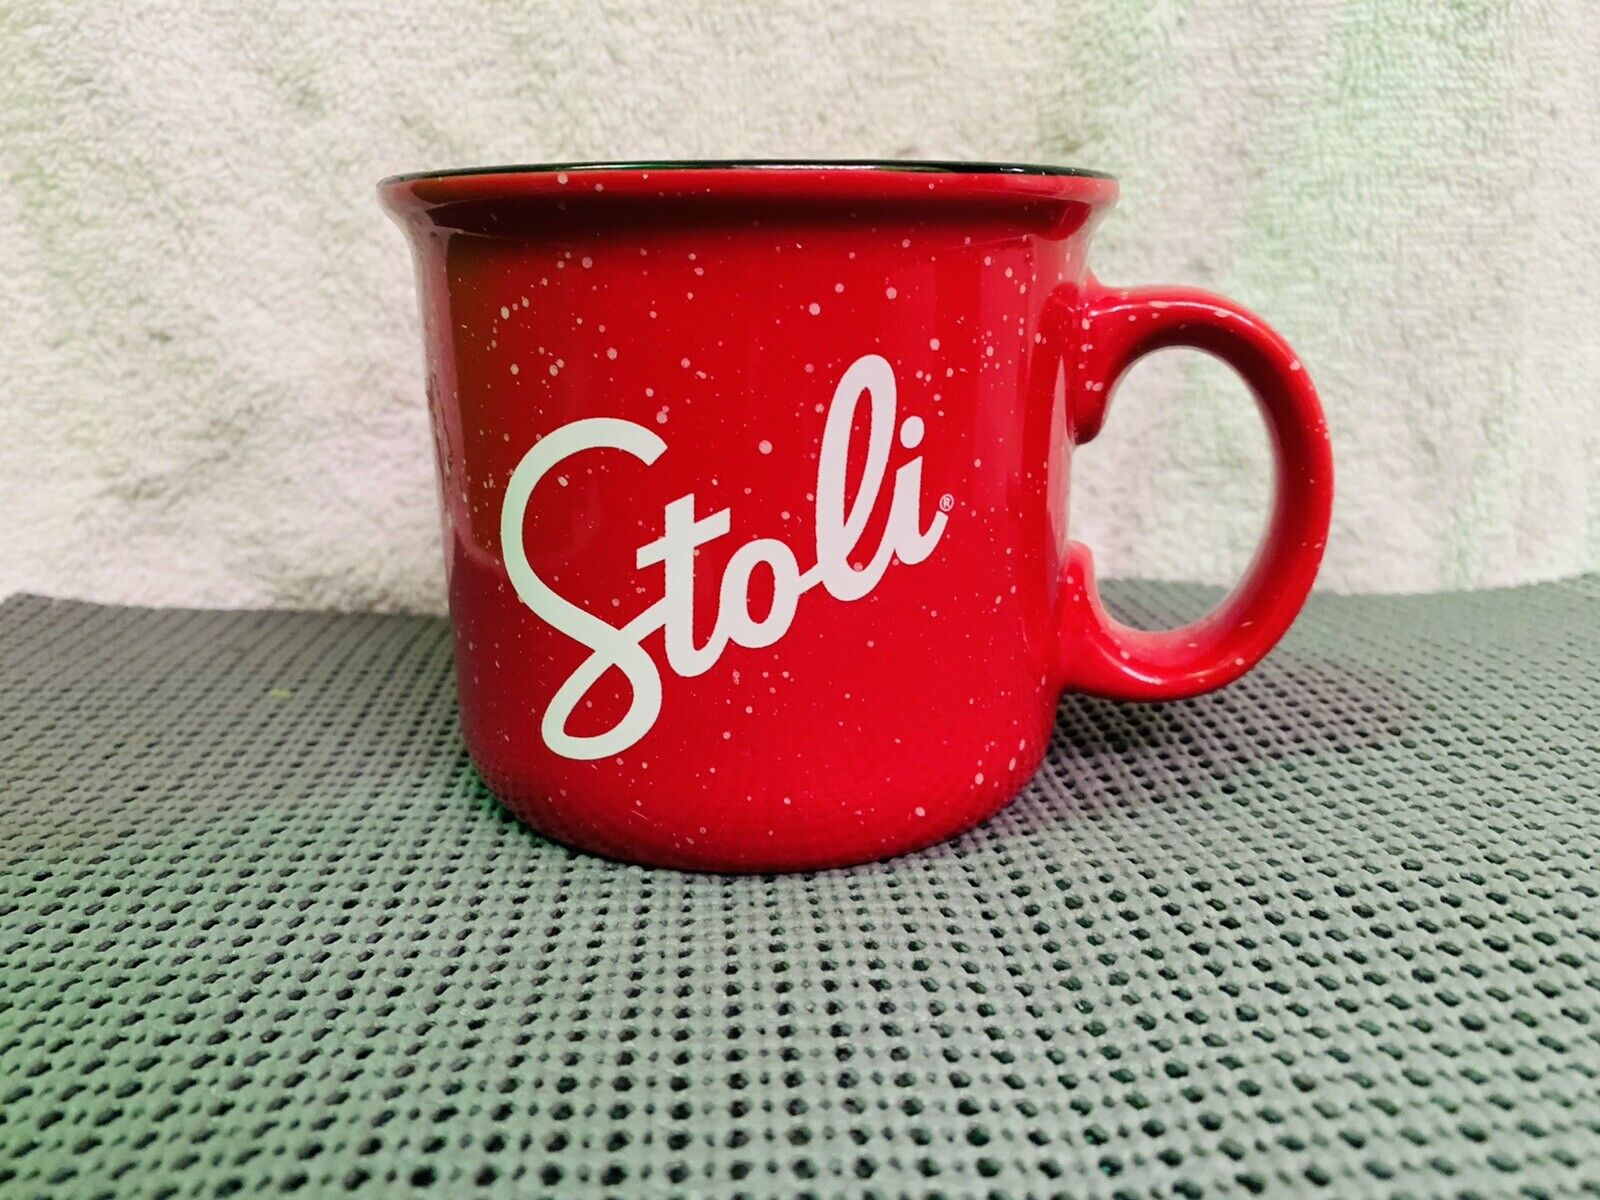 Stolichnaya Vodka Large Red Camping Style Ceramic Coffee Mug / Cup - Stoli #1535